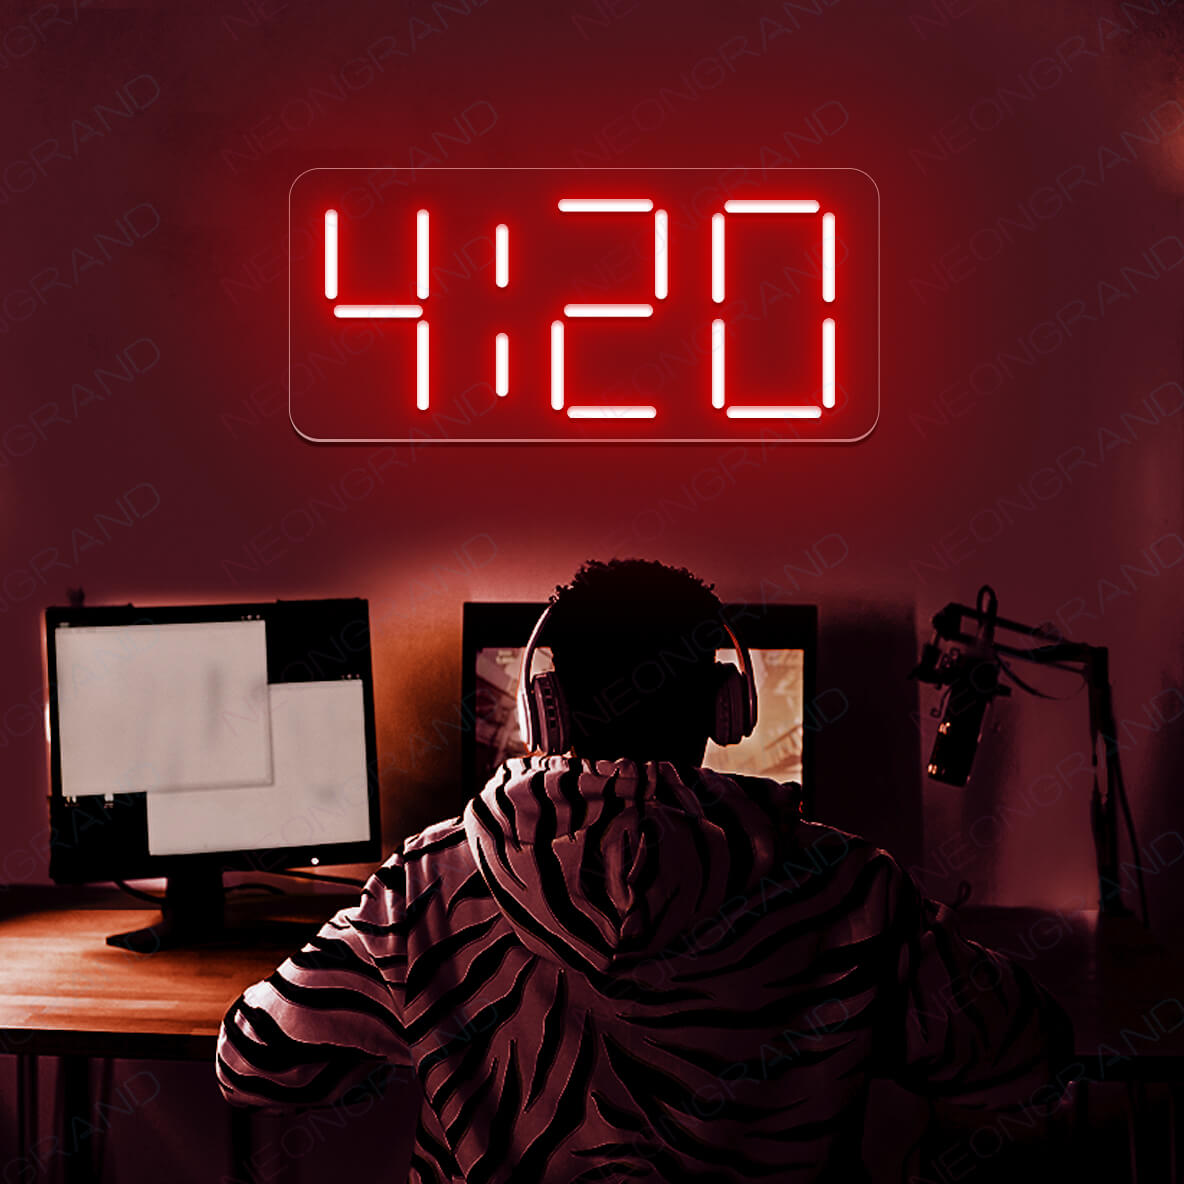 420 Neon Sign Marijuana Cannabis Led Light red